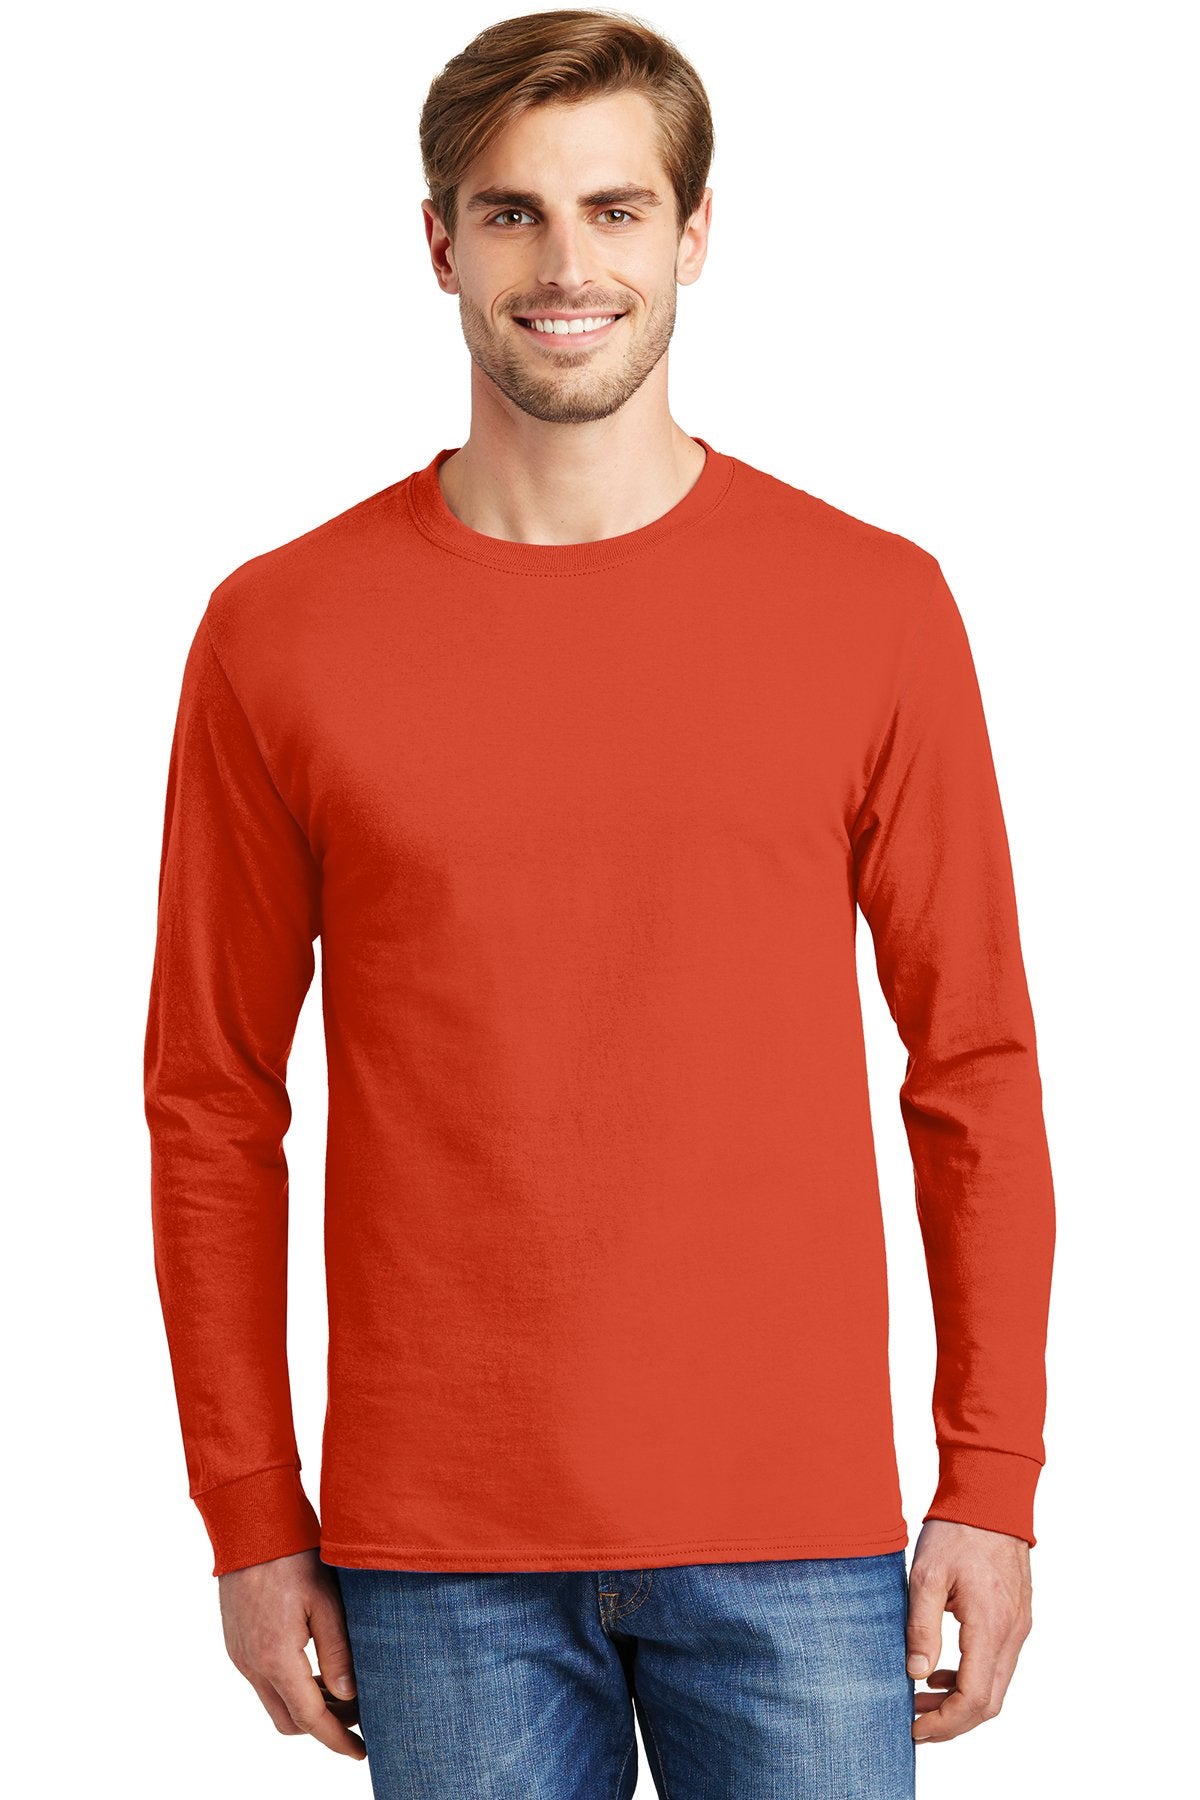 Hanes Tagless Cotton Long Sleeve T Shirt in Orange, add a custom design